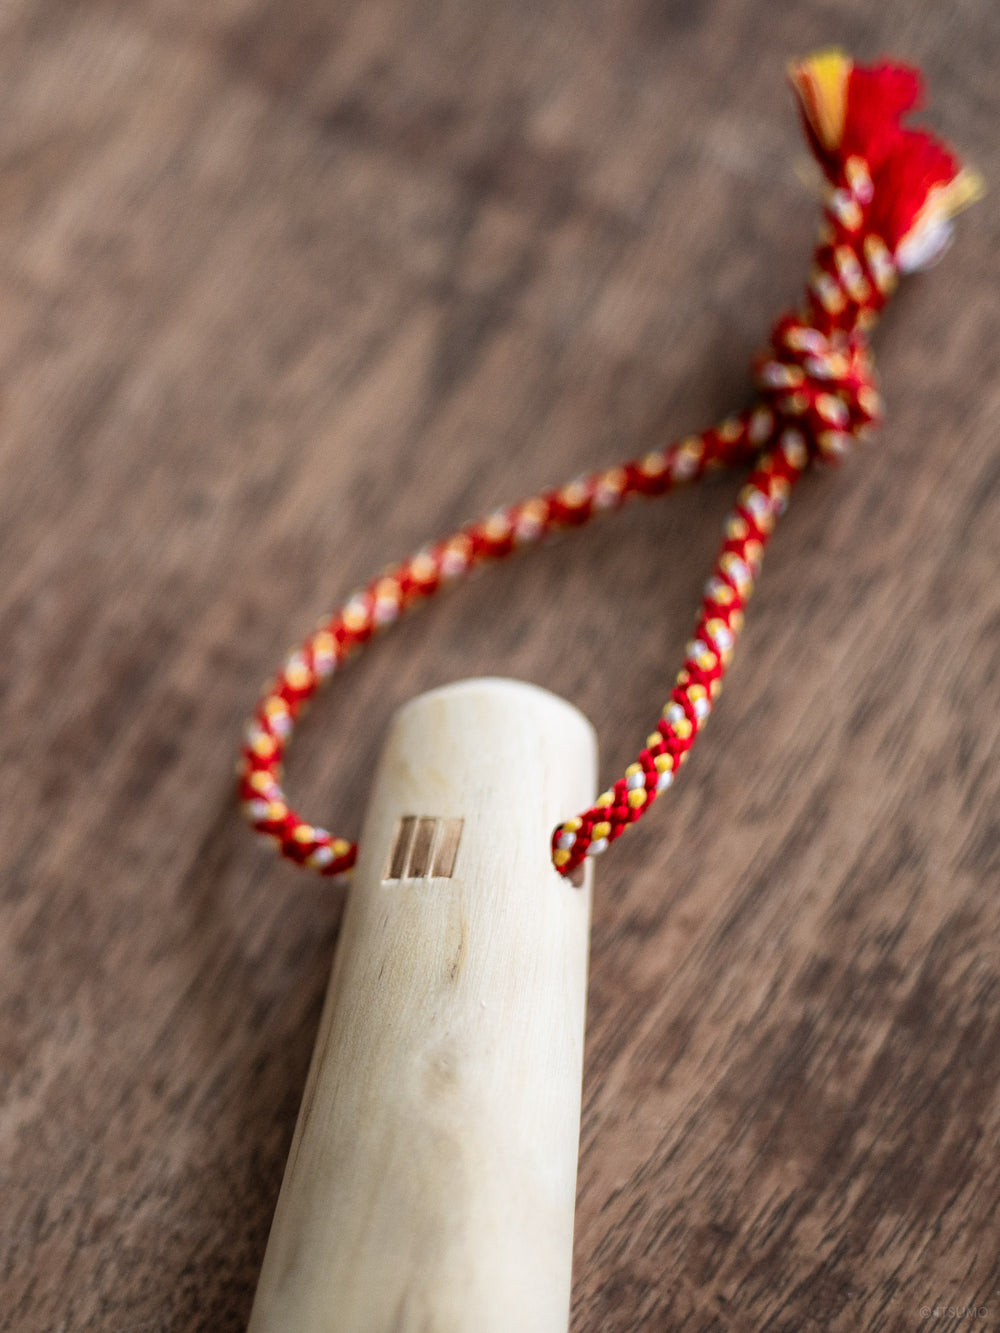 Azmaya sansho wood pestle smooth handle with red string for hanging